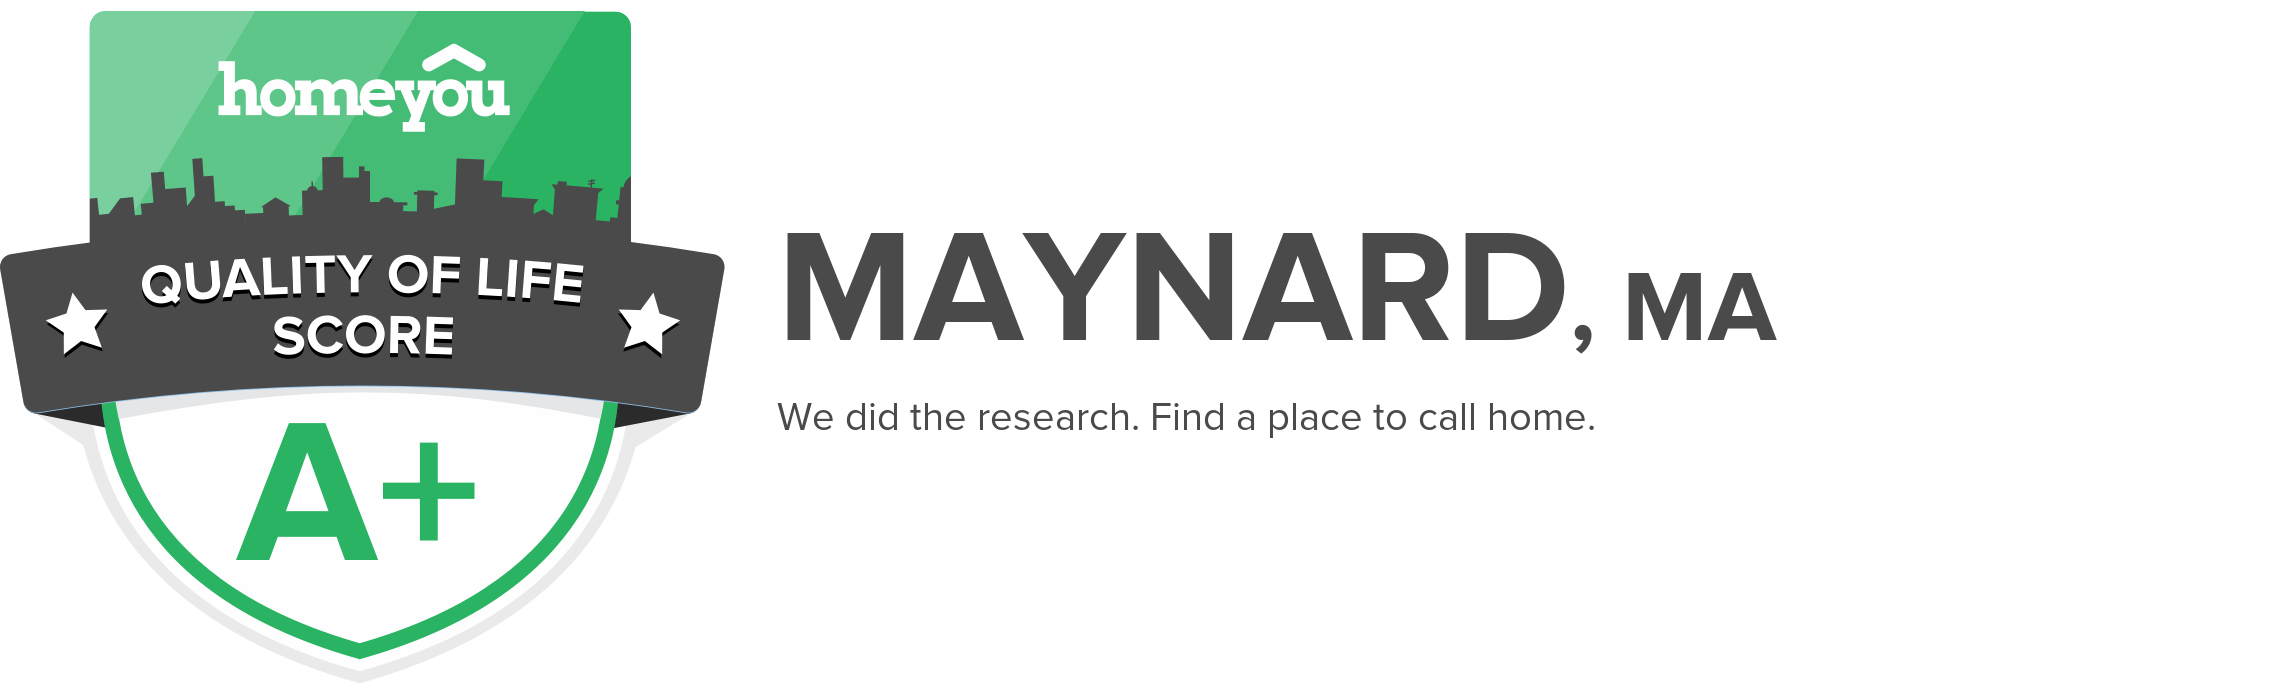 Maynard, MA